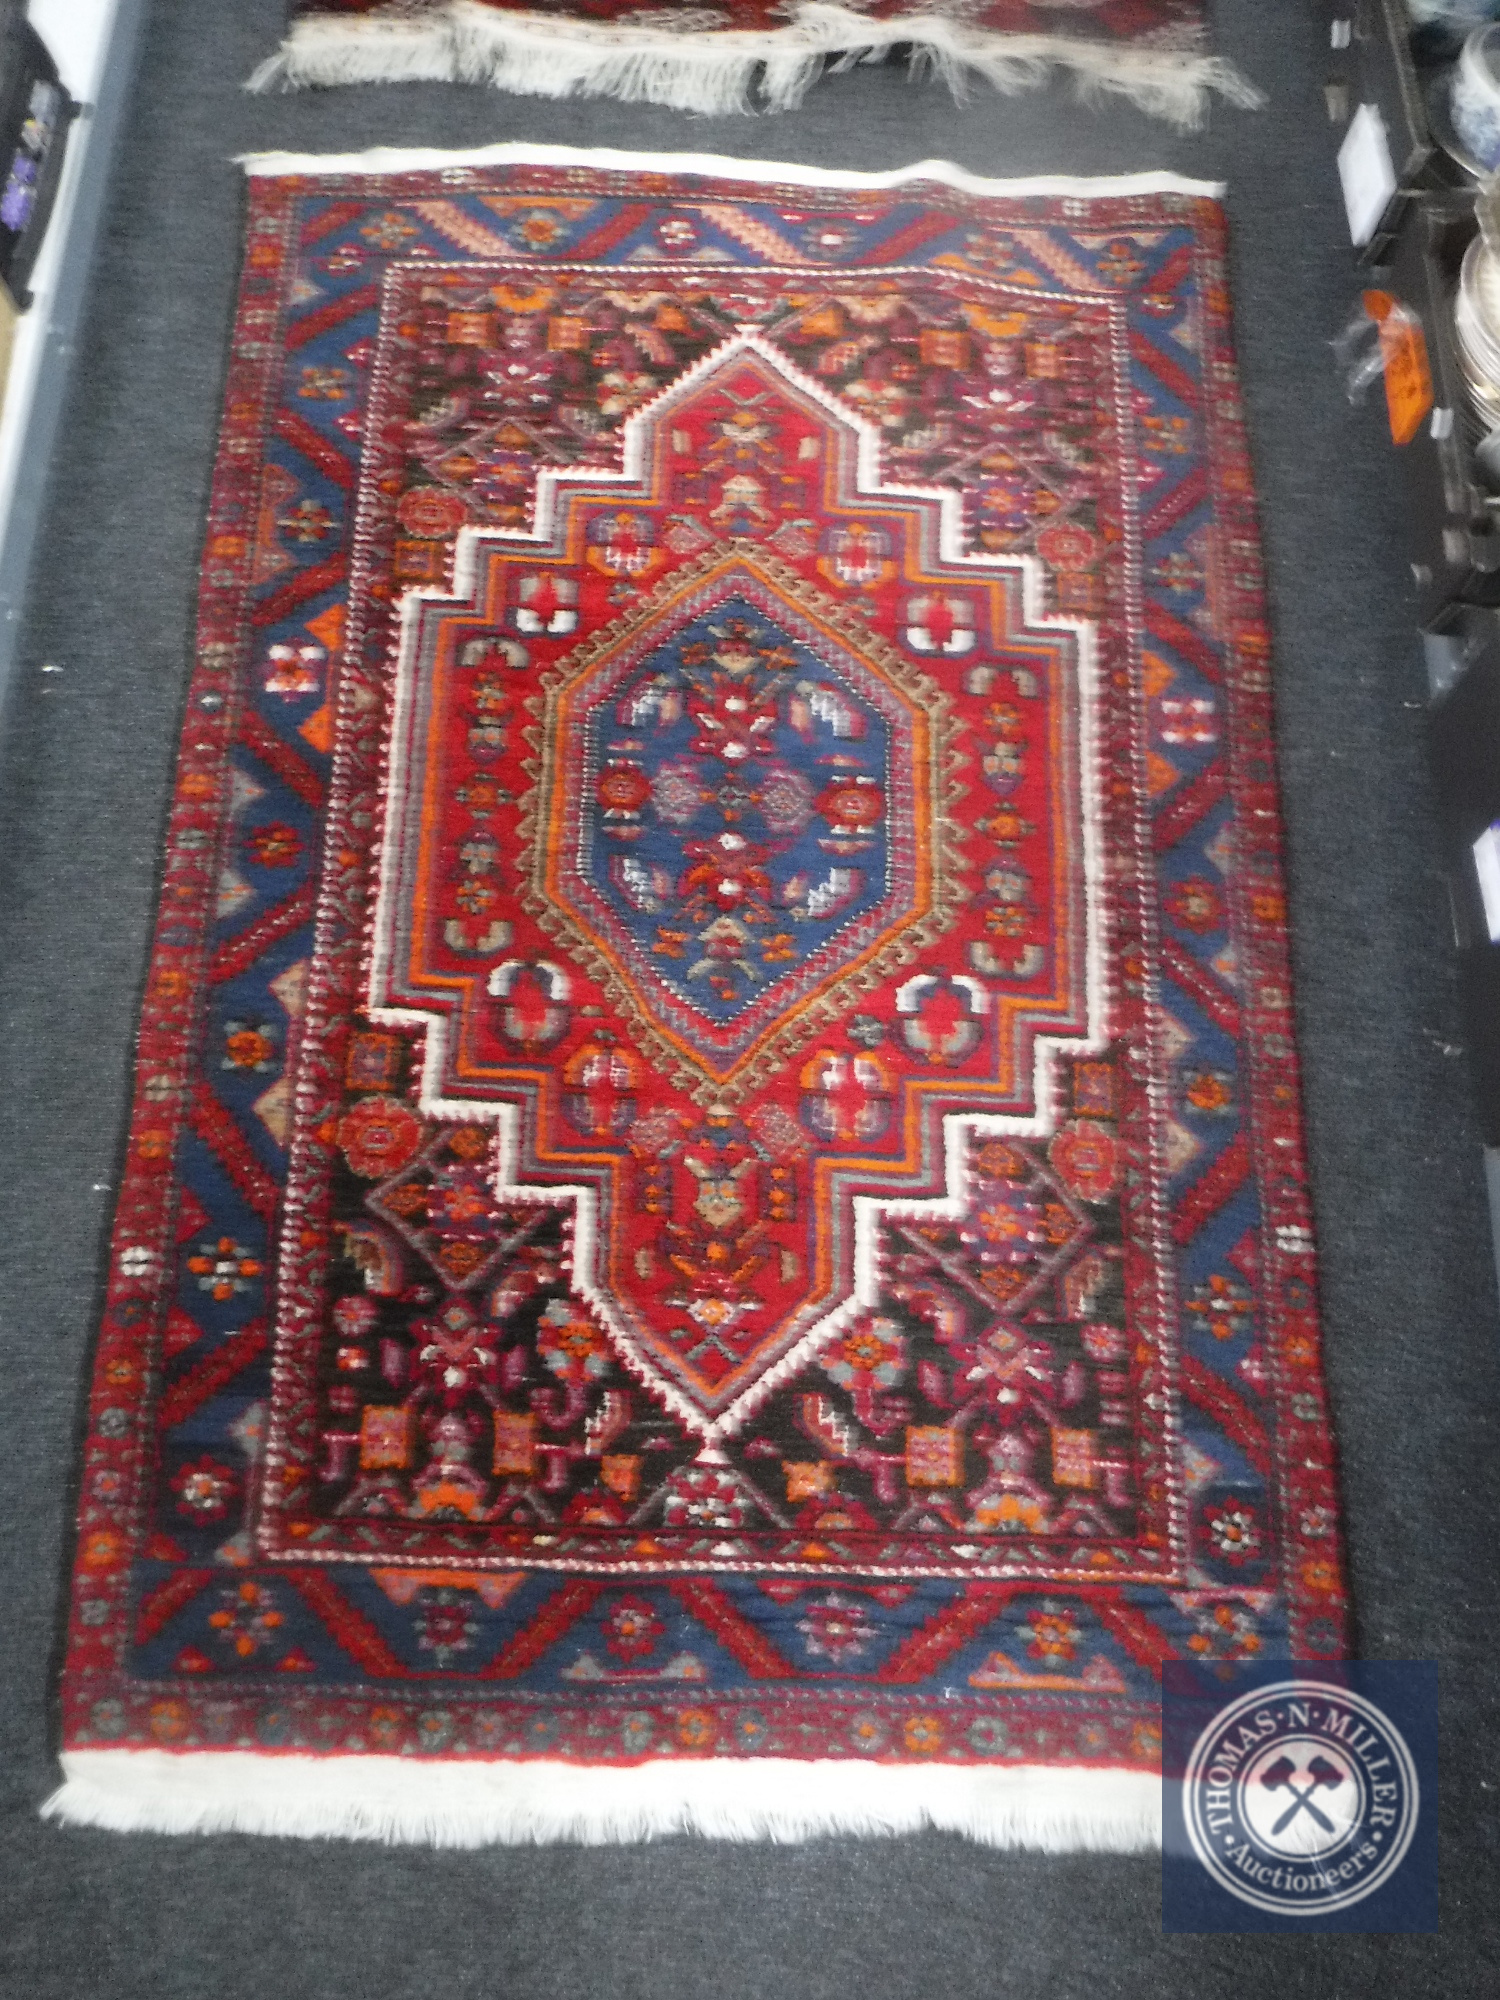 An Iranian Hamadan rug,